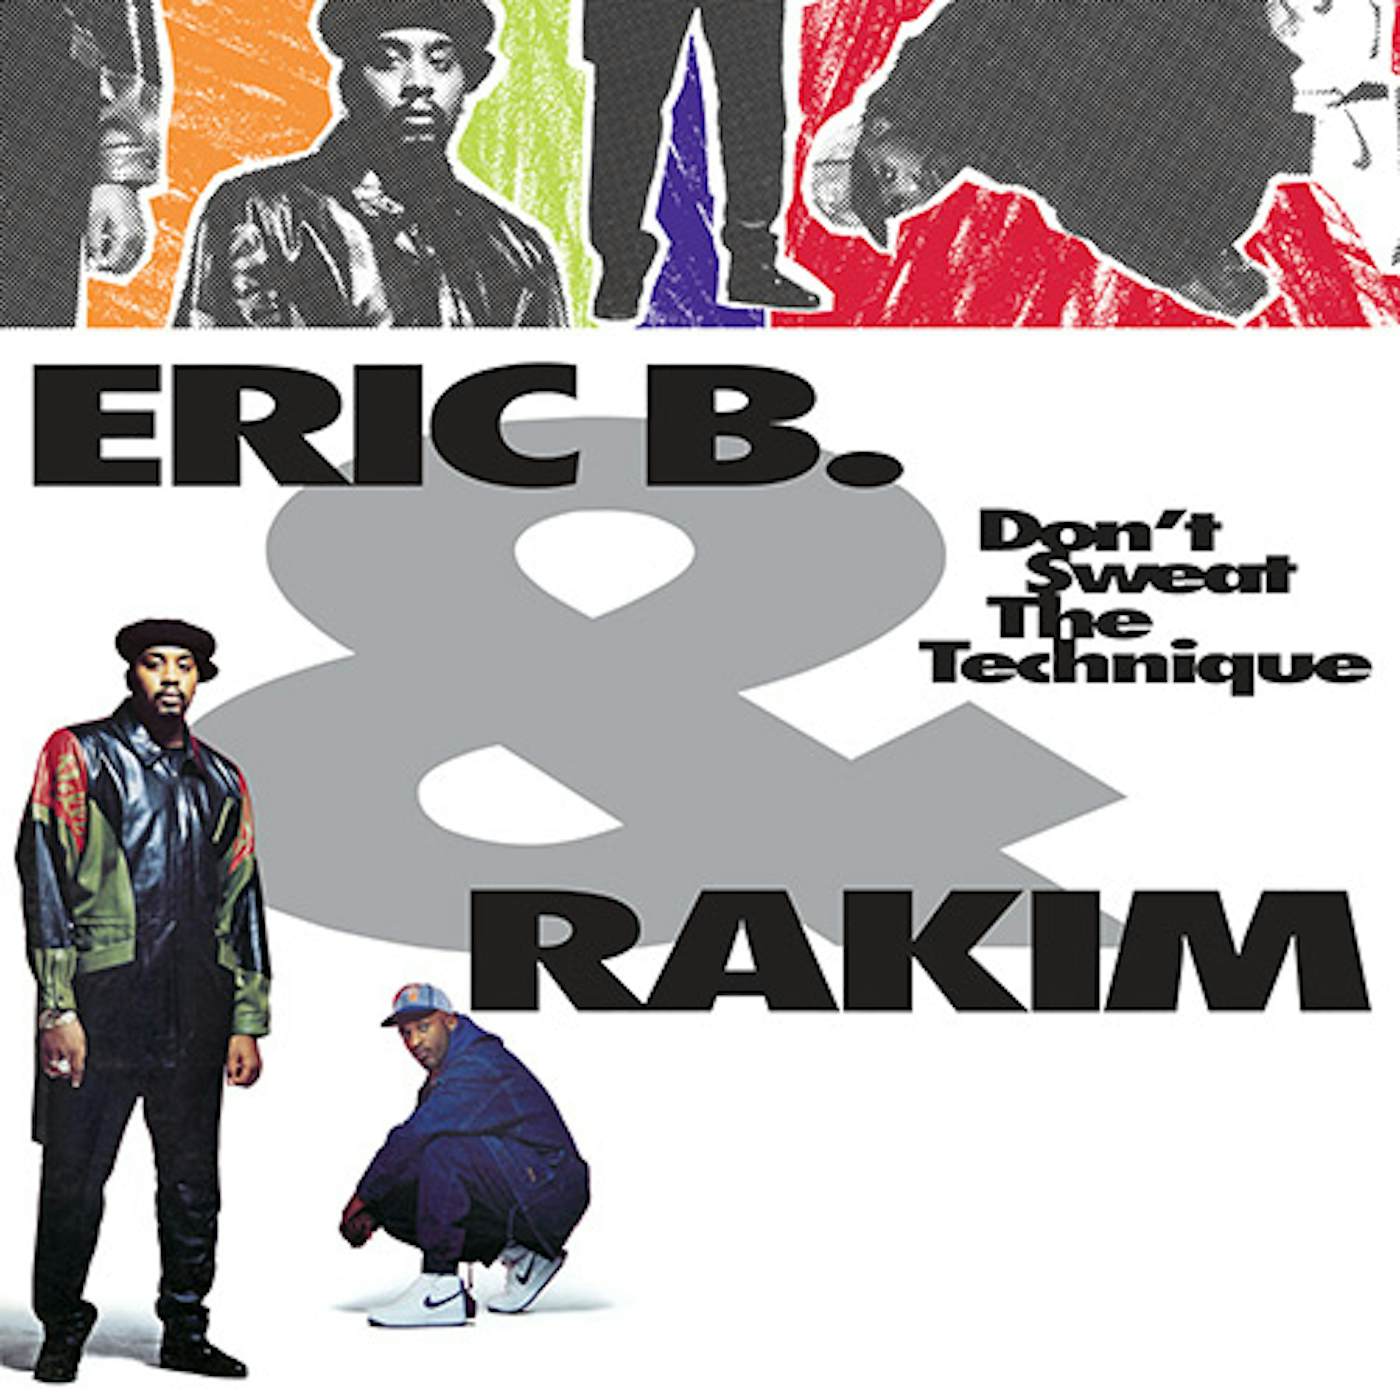 Eric B. & Rakim Don't Sweat The Technique Vinyl Record